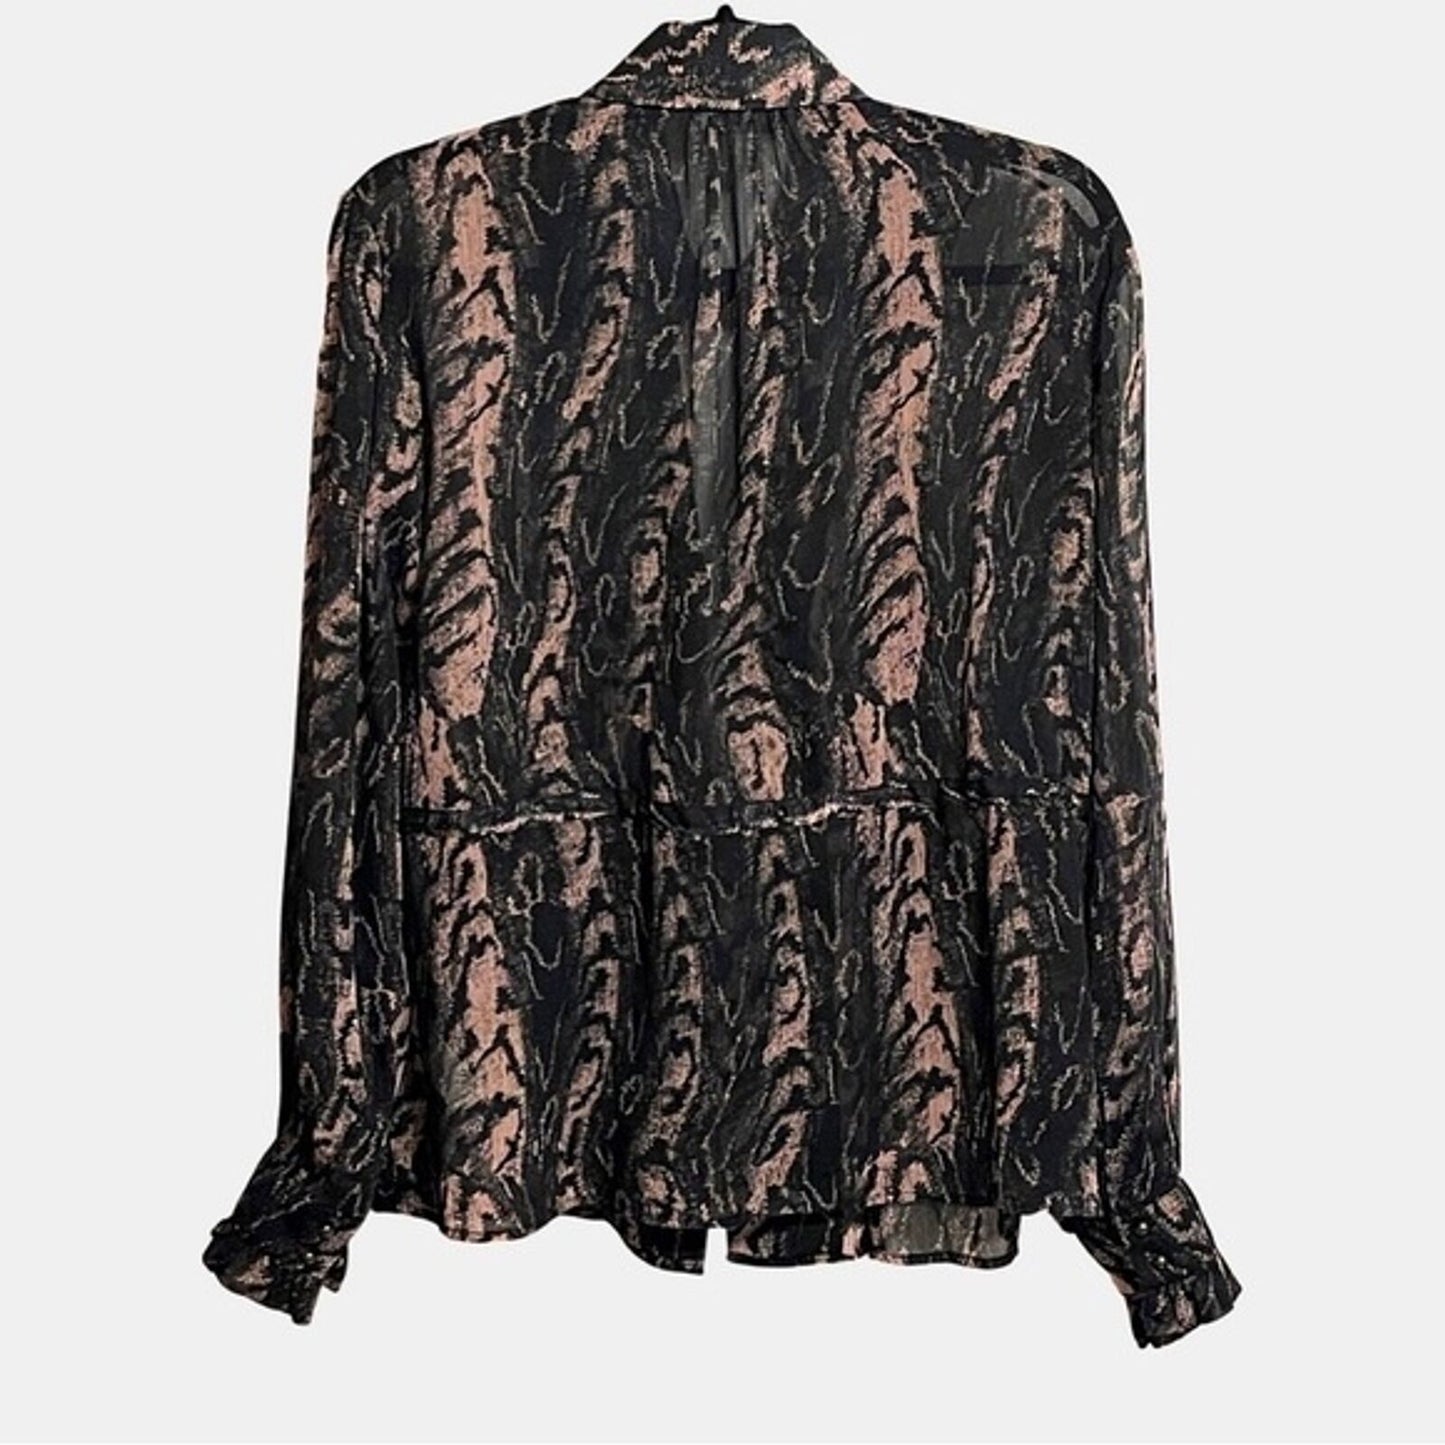 Topshop Long Sleeve Sheer Black Pink Animal Print Blouse Size S/M